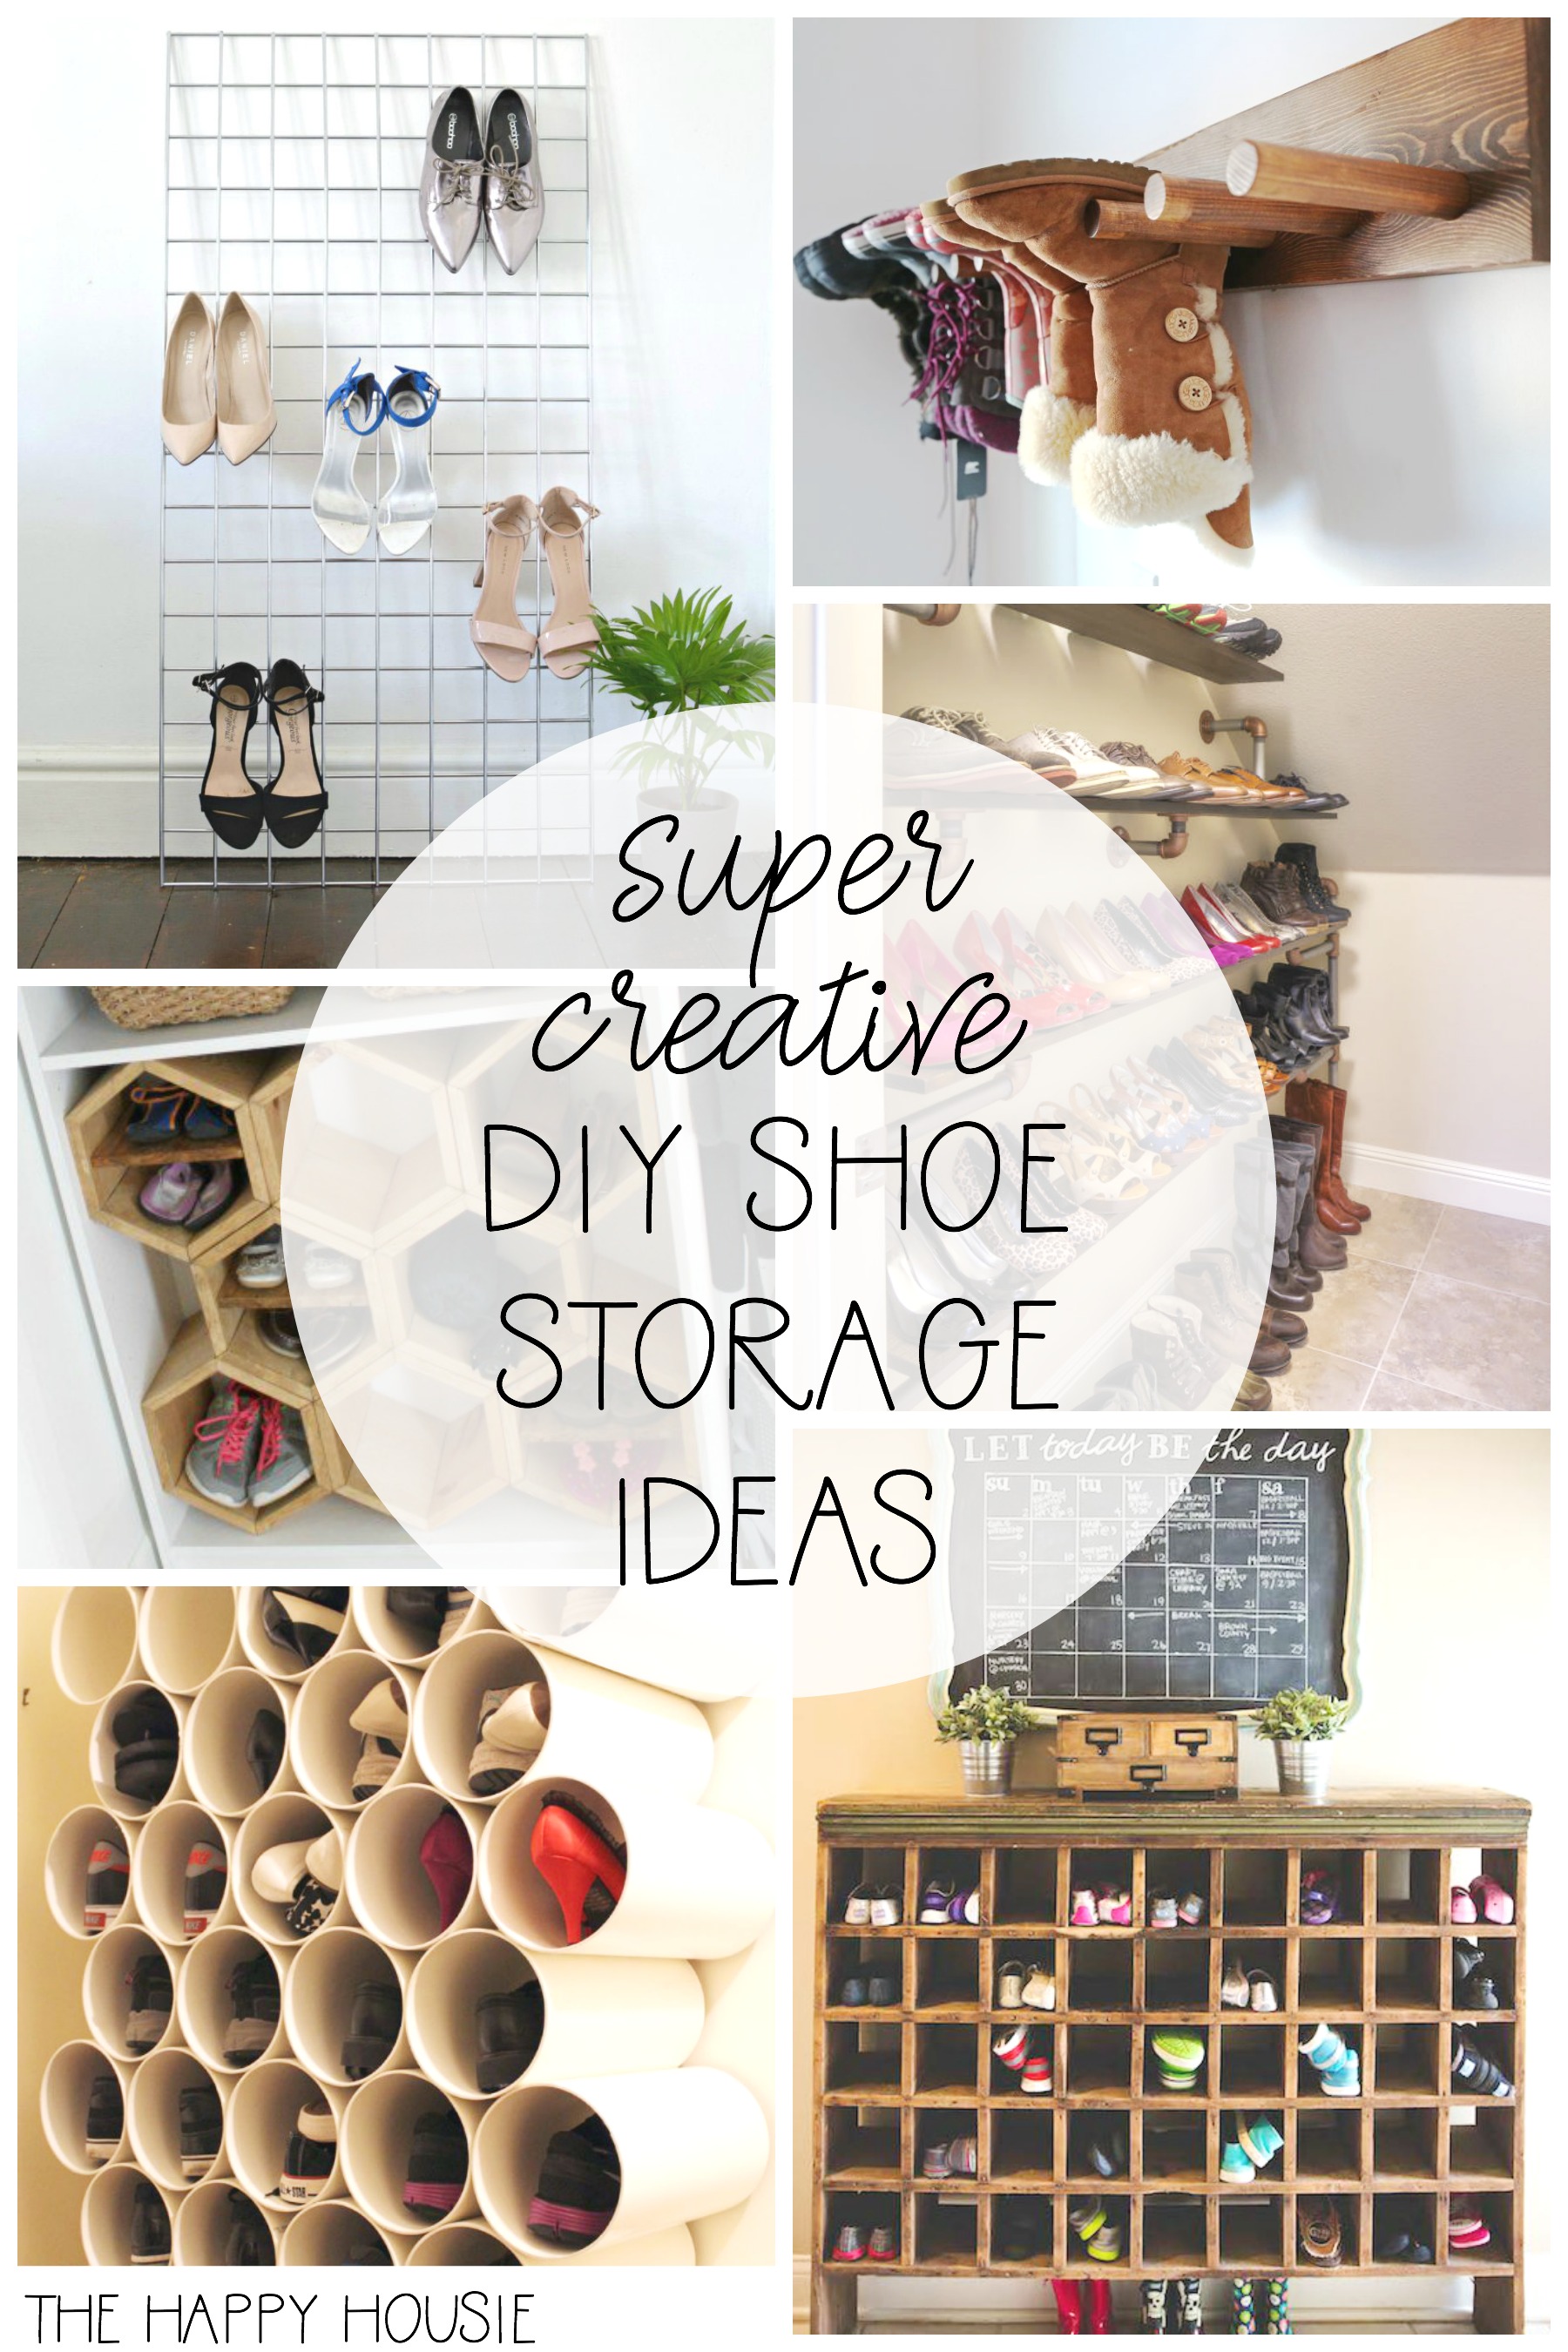 Super creative DIY shoe storage ideas poster.